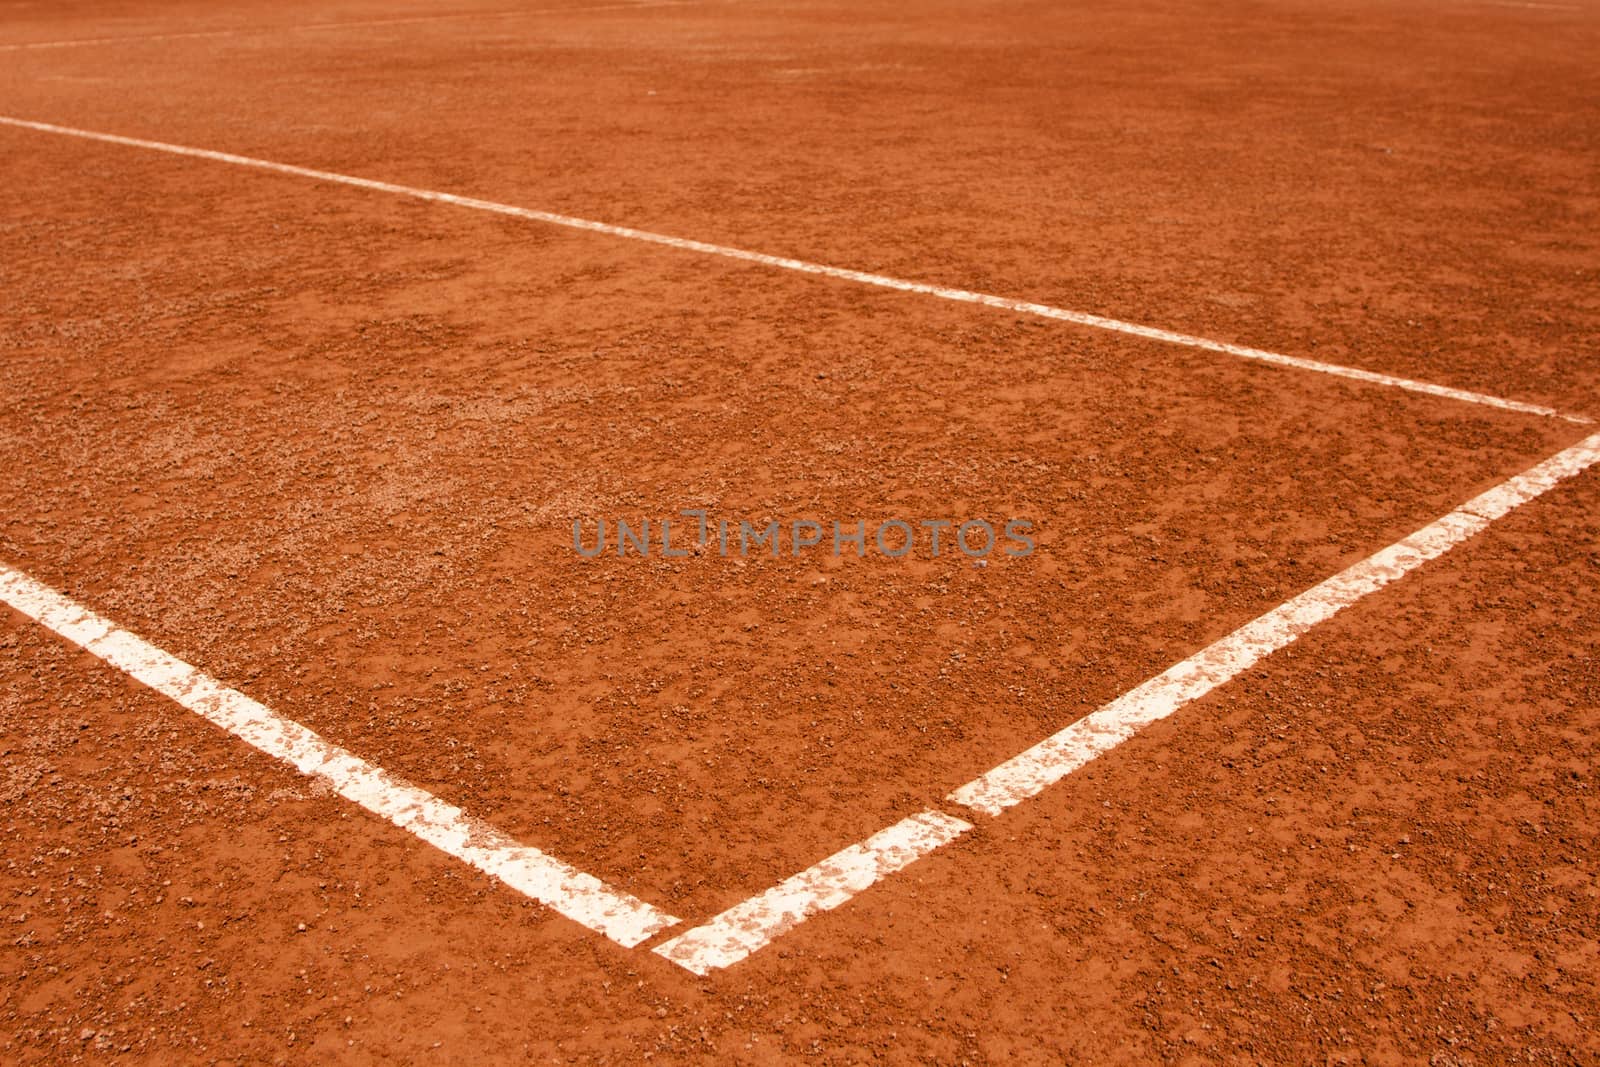 Tennis court lines